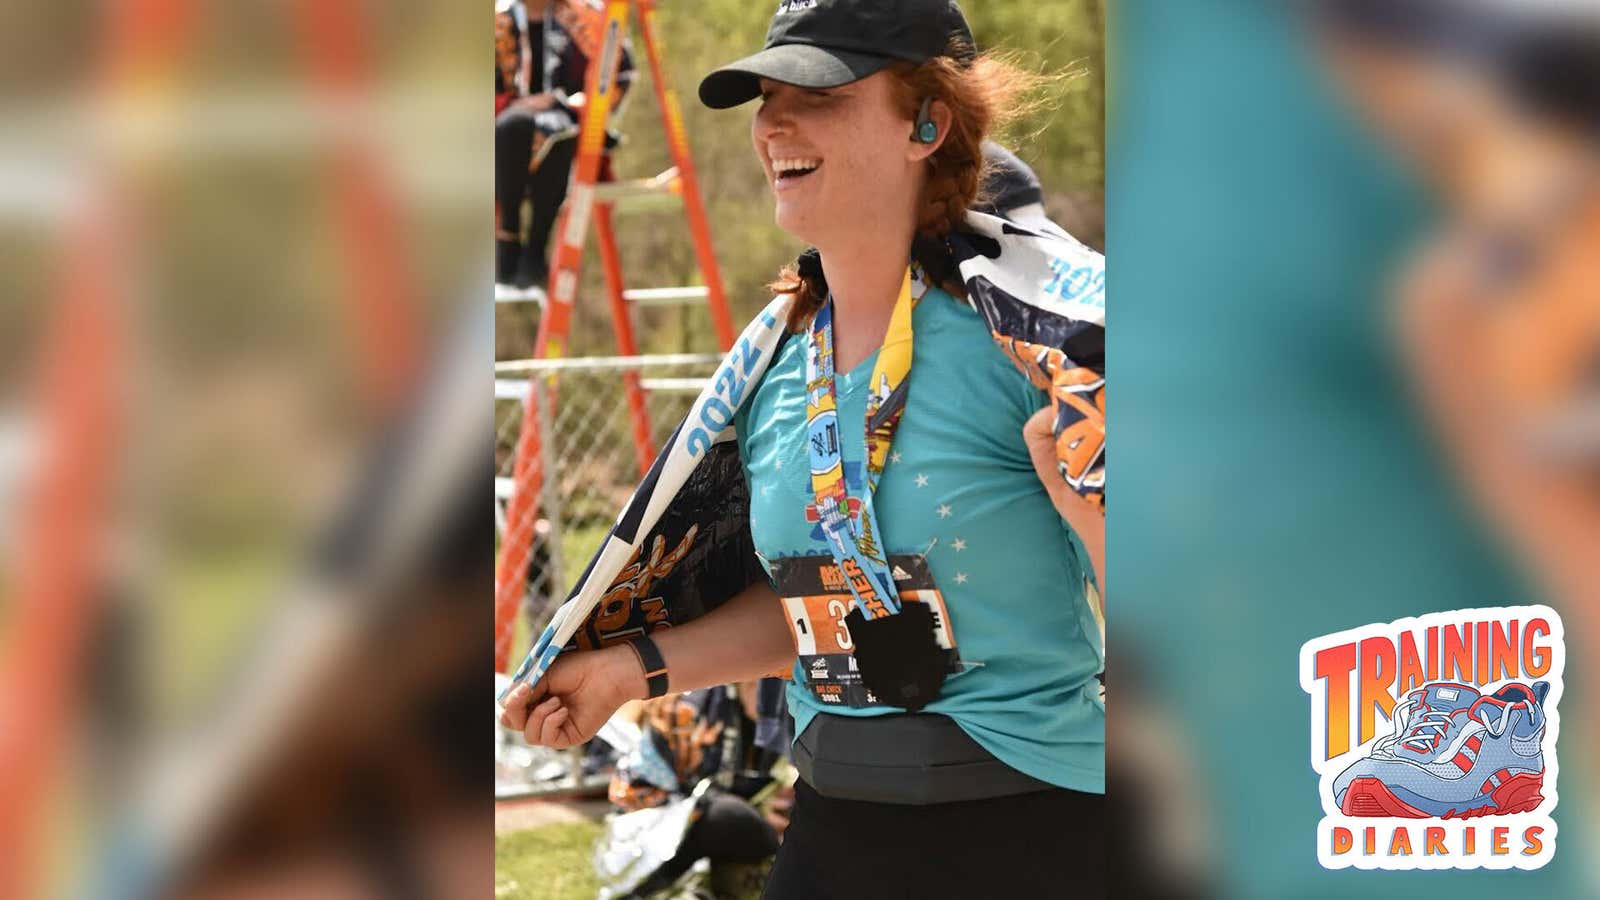 Meredith's Training Diary: How to Choose a Marathon Training Program